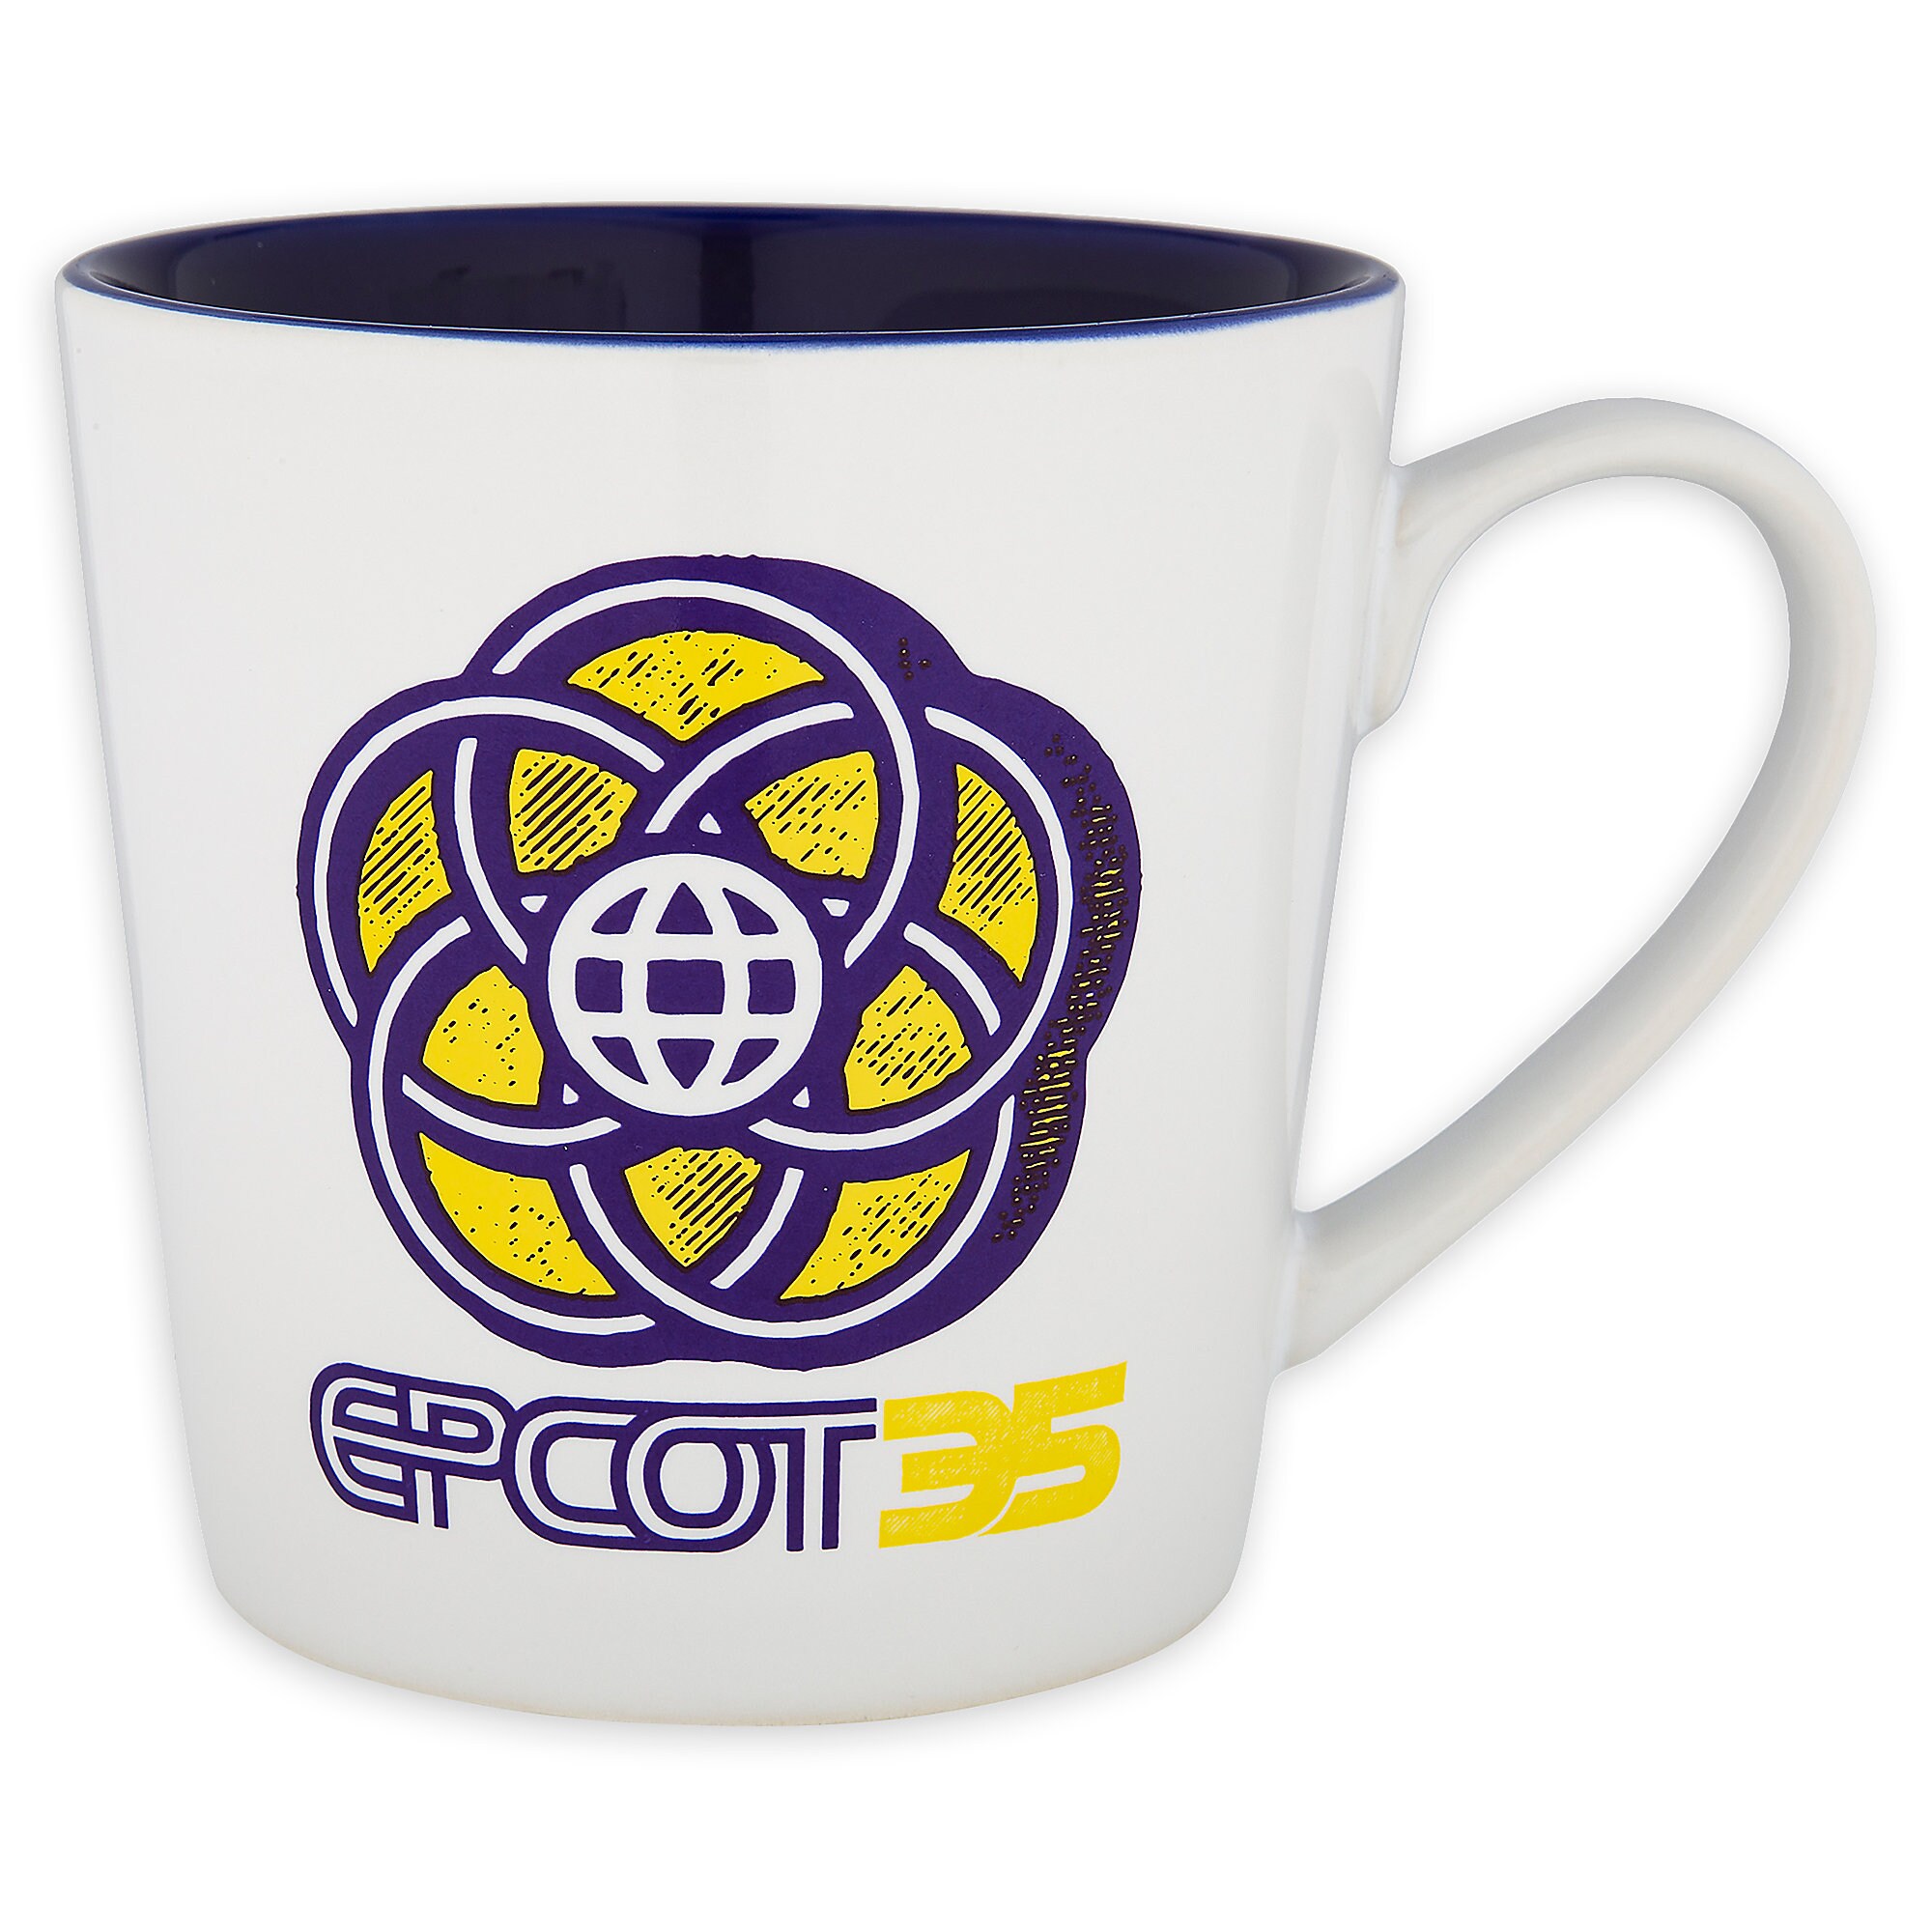 Epcot 35th Anniversary Mug by Starbucks